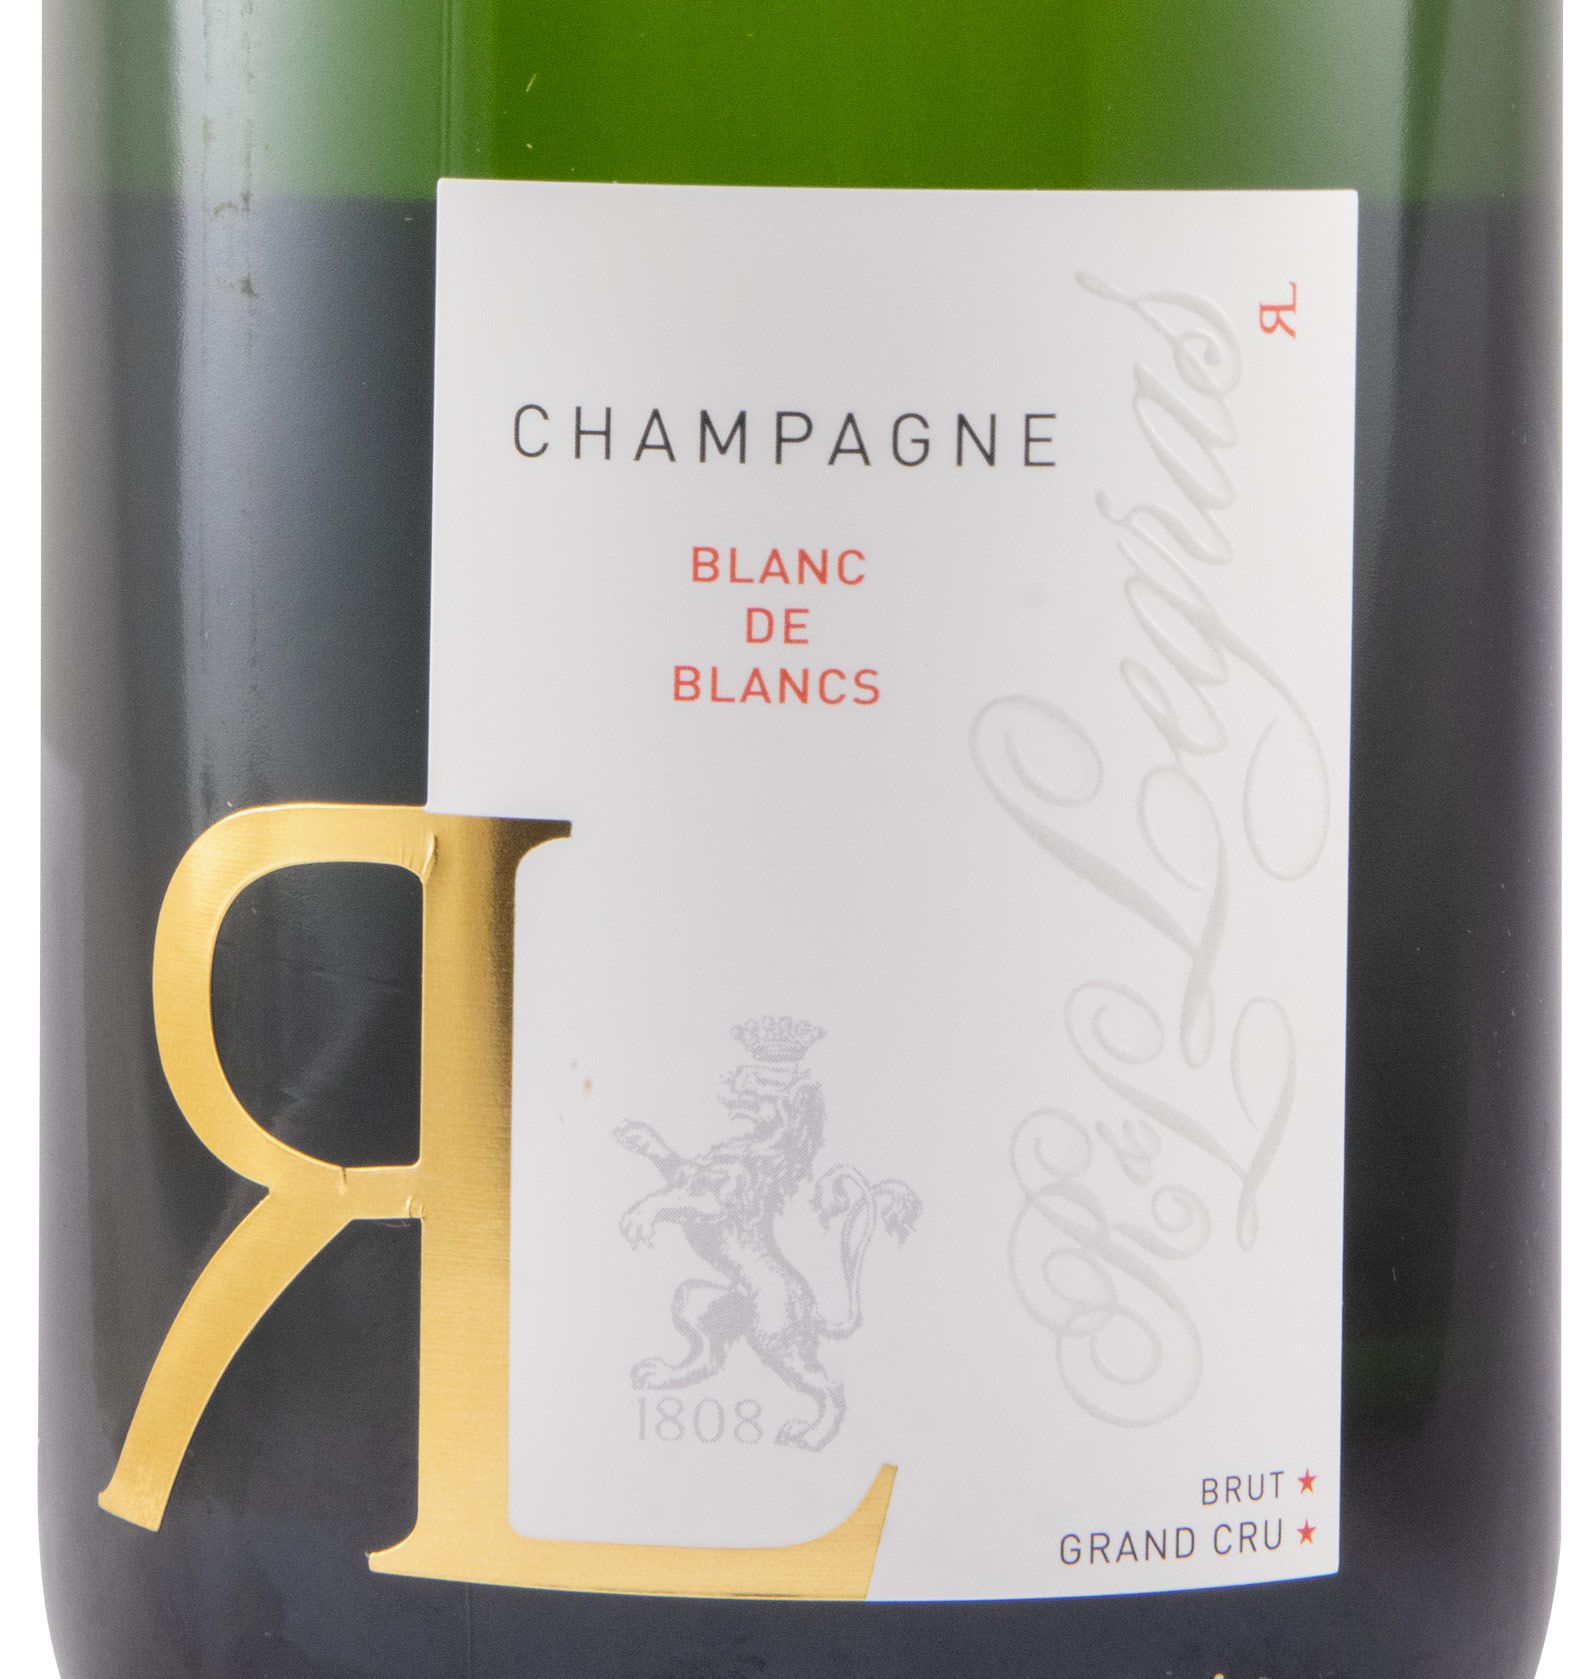 RL Legras Brut Champagne Blanc de Blancs Grand Cru